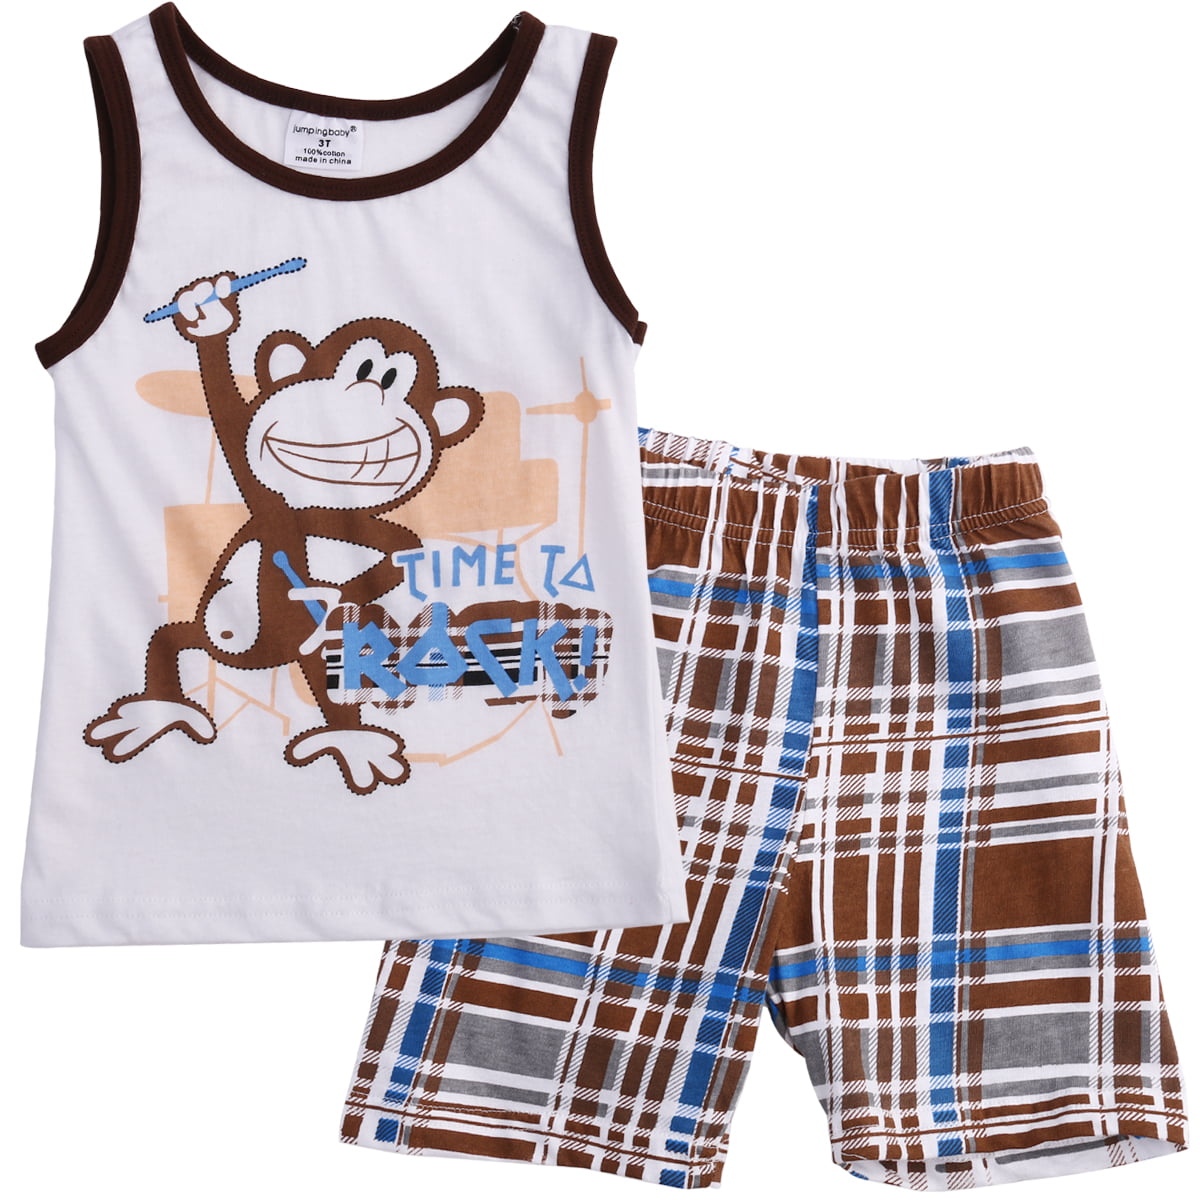 2pcs Kids Boys Girls Pajamas Set T-Shirt Tops Shorts Pants Outfit Sleepwear